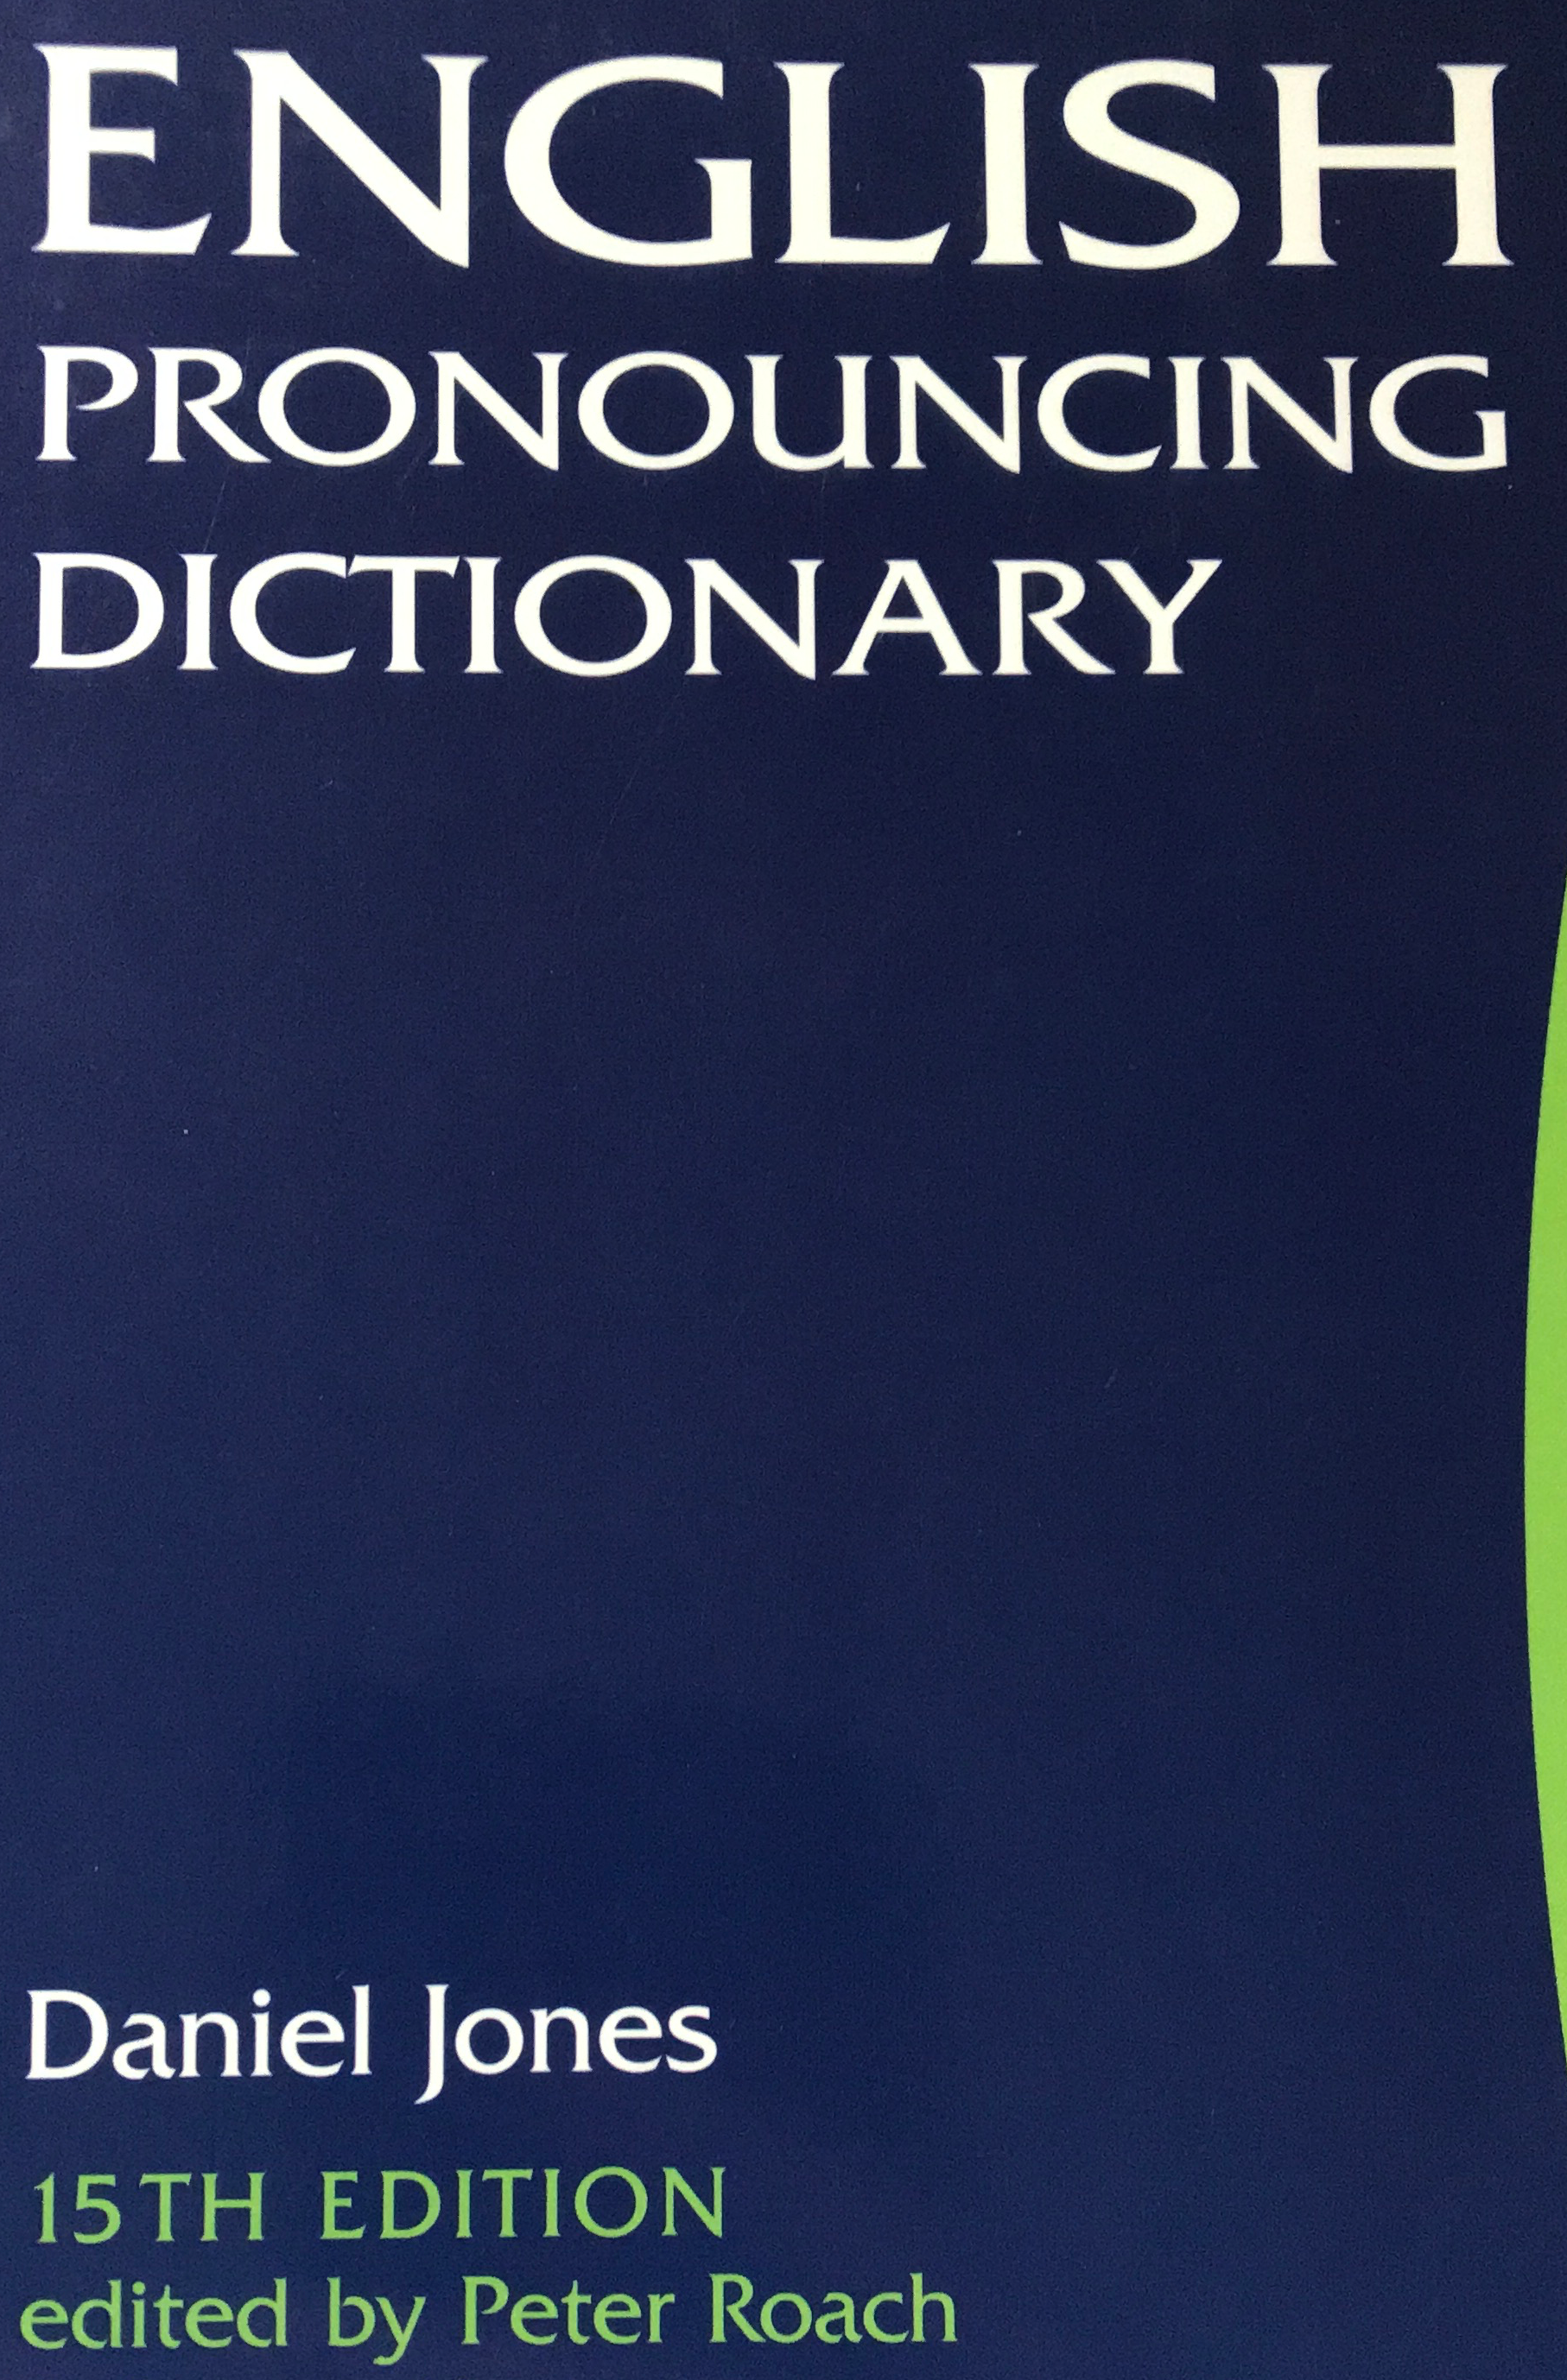 English pronouncing dictionsry